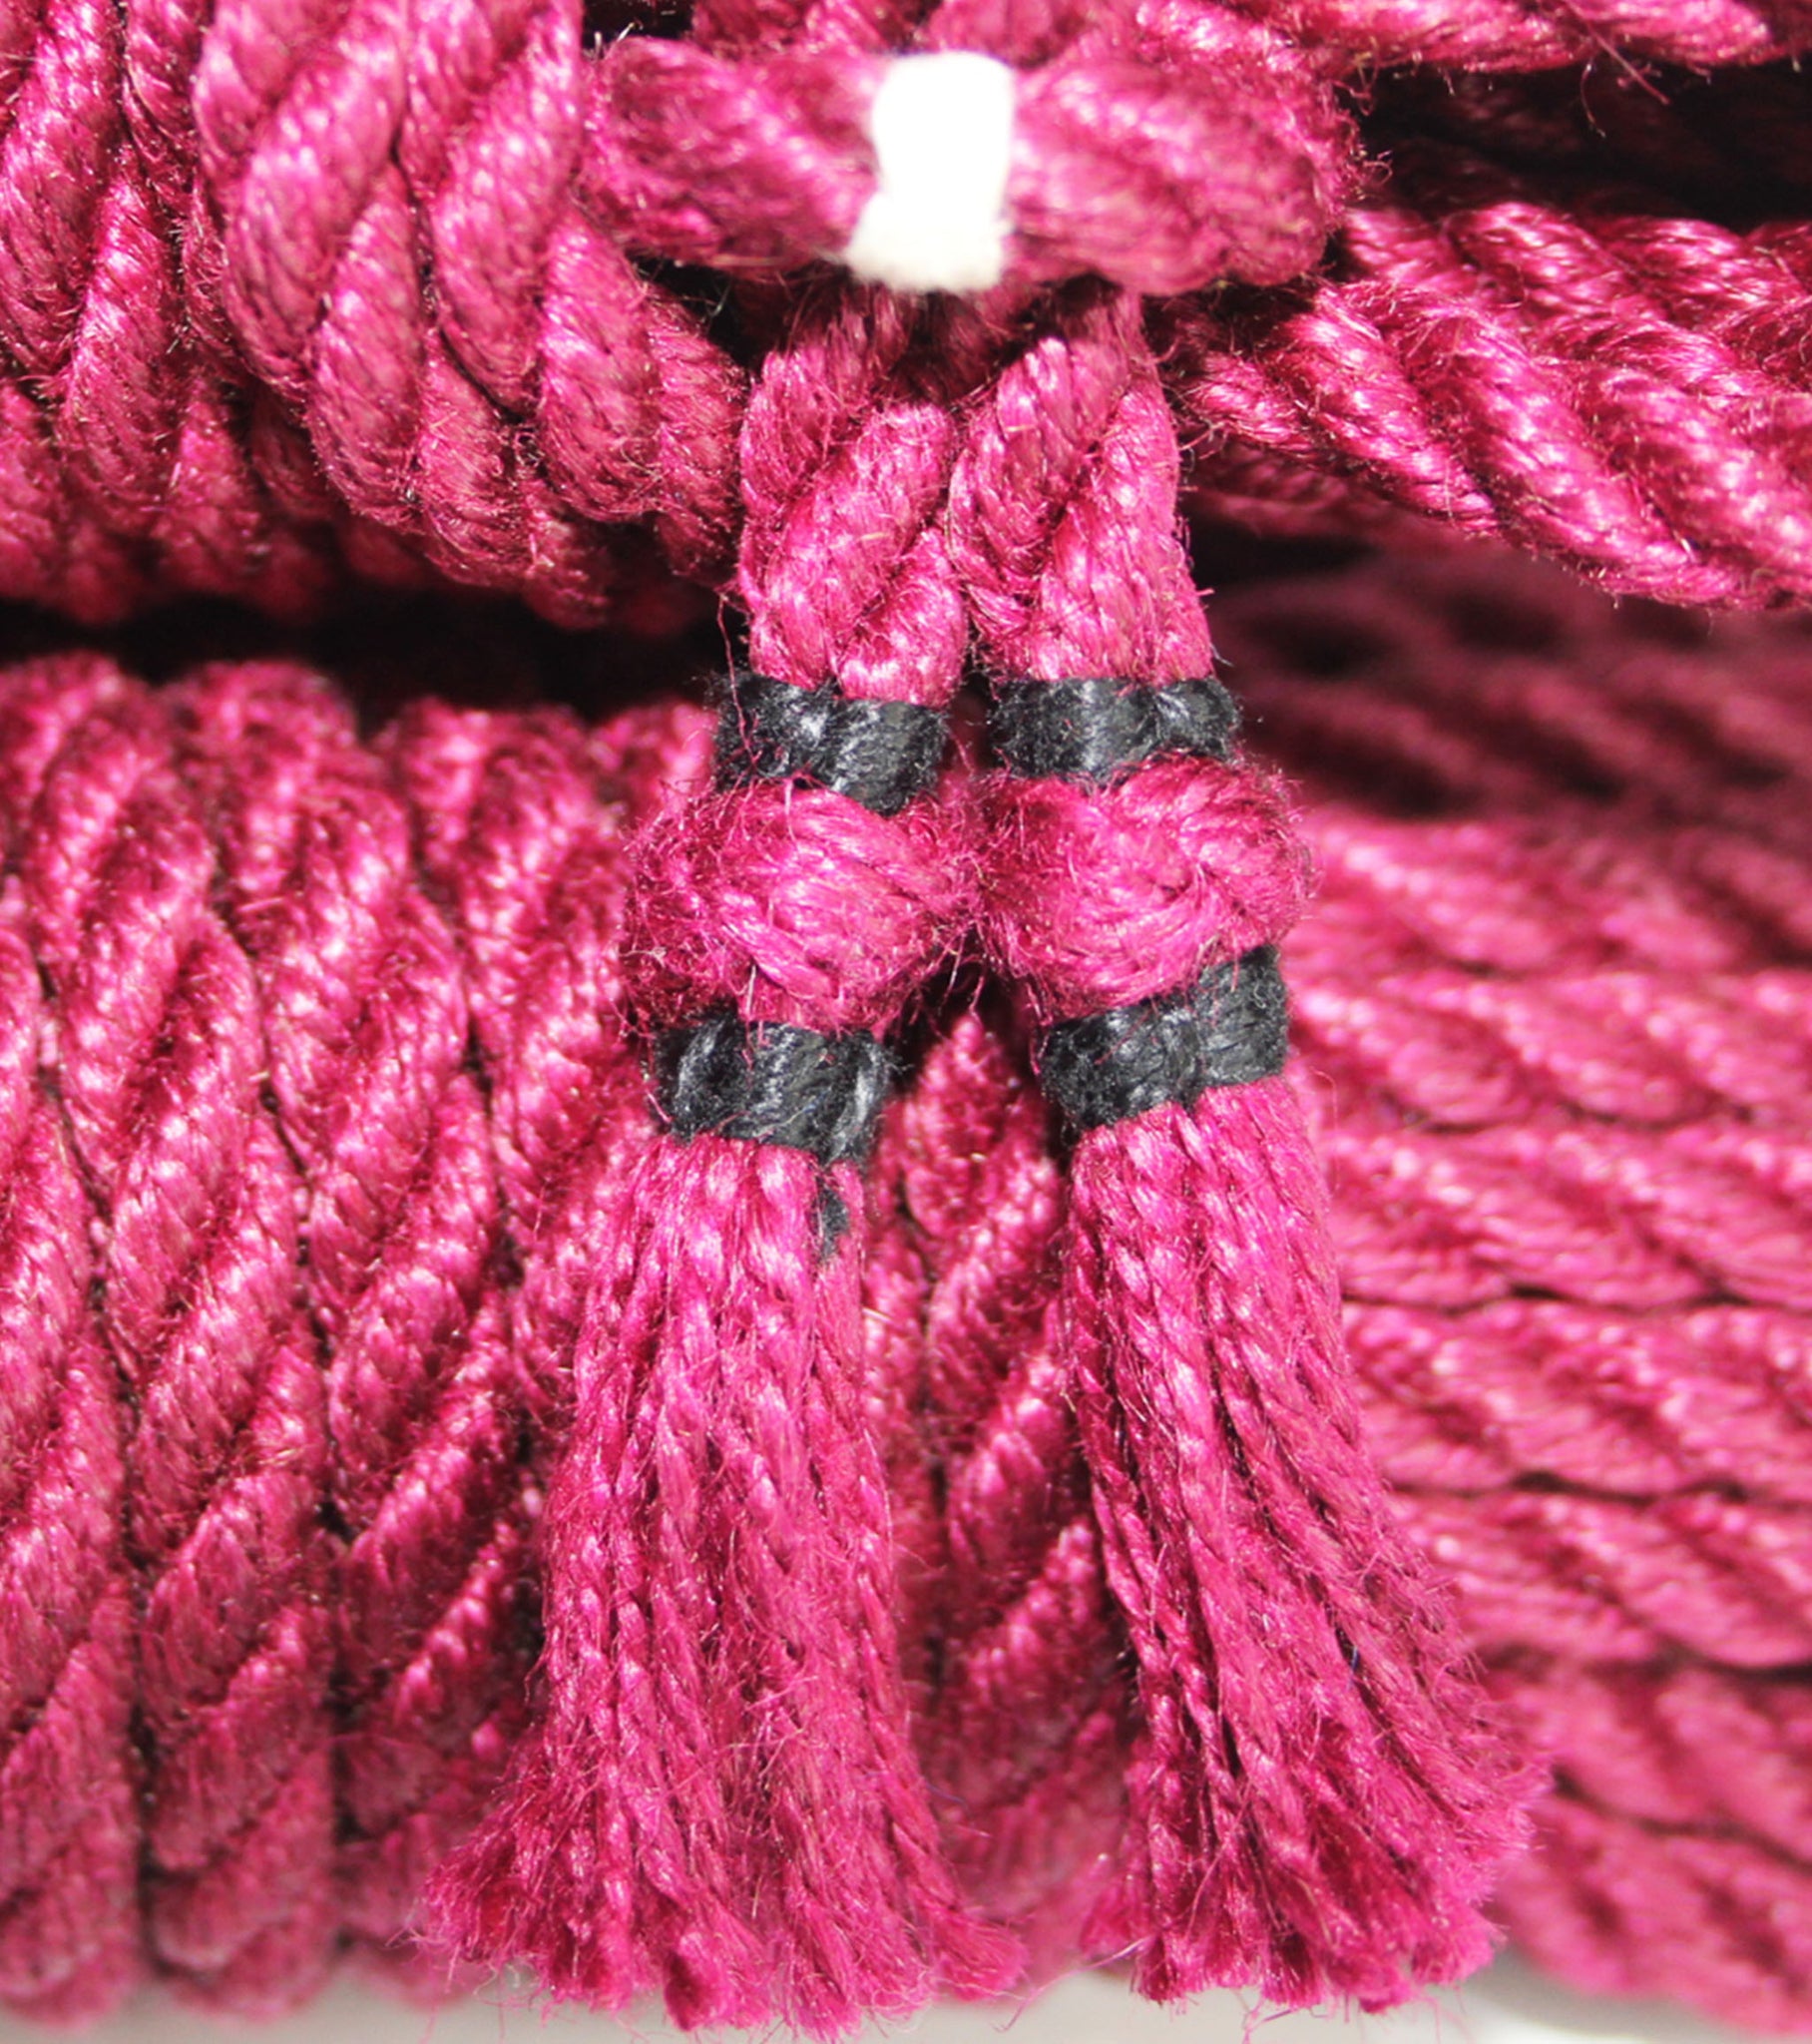 Chroma Red 8 jute rope (8m x 5-pack) – Douglas Kent Rope